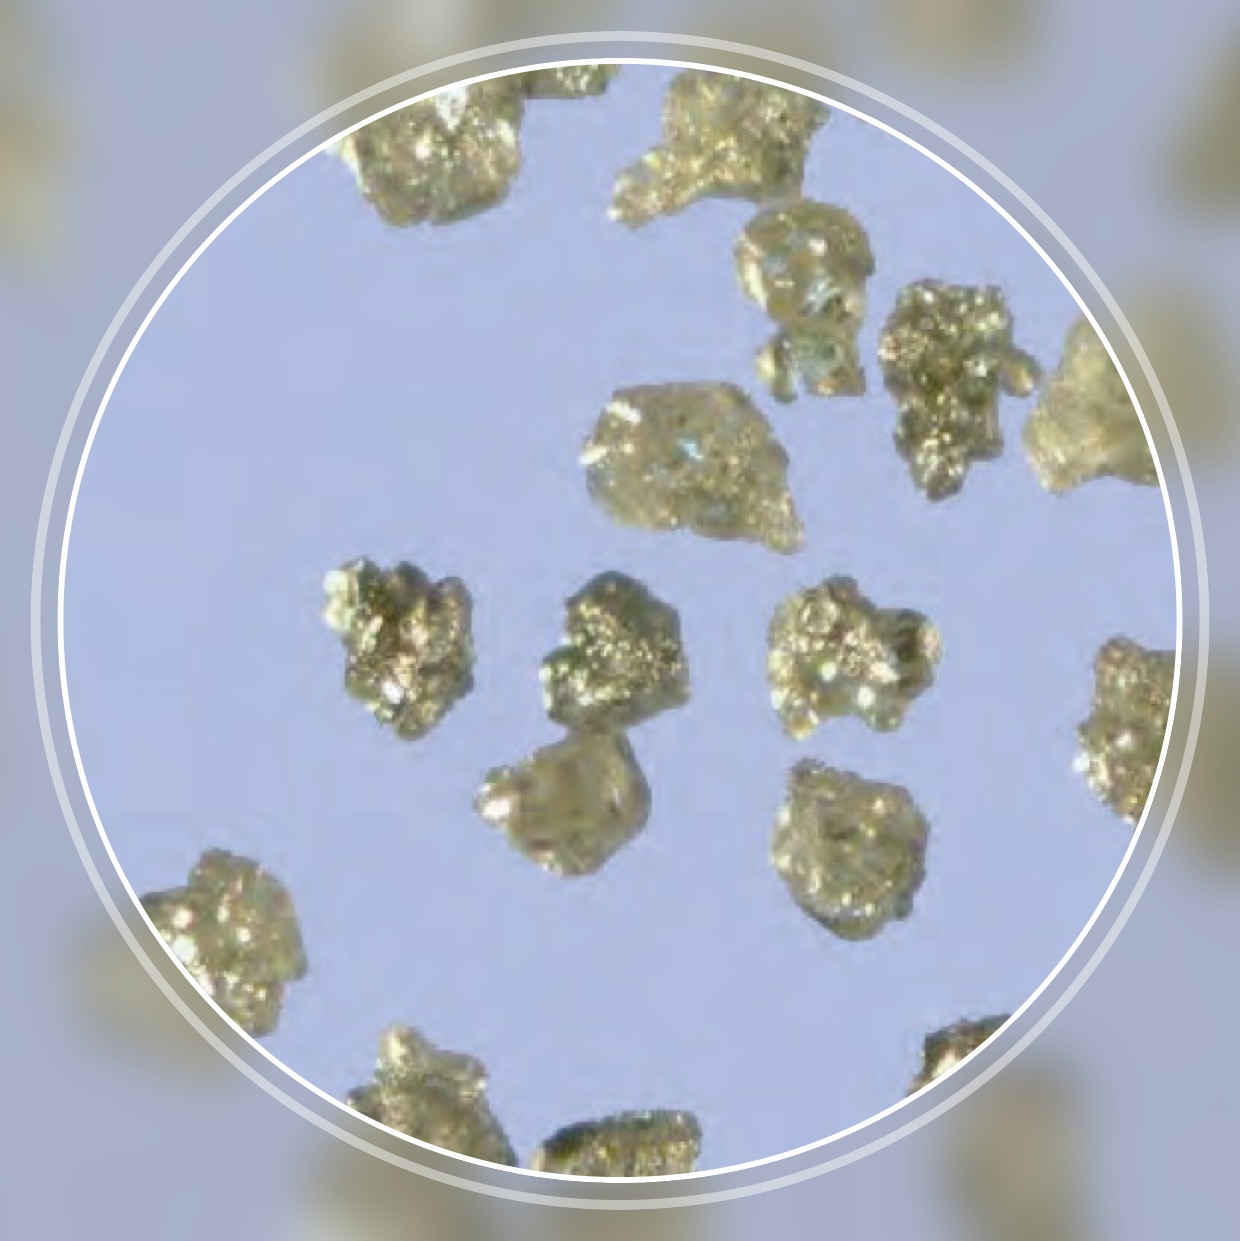 SND-R15 Standard Asteng Blocky Resin Bond Diamond With Medium Friability